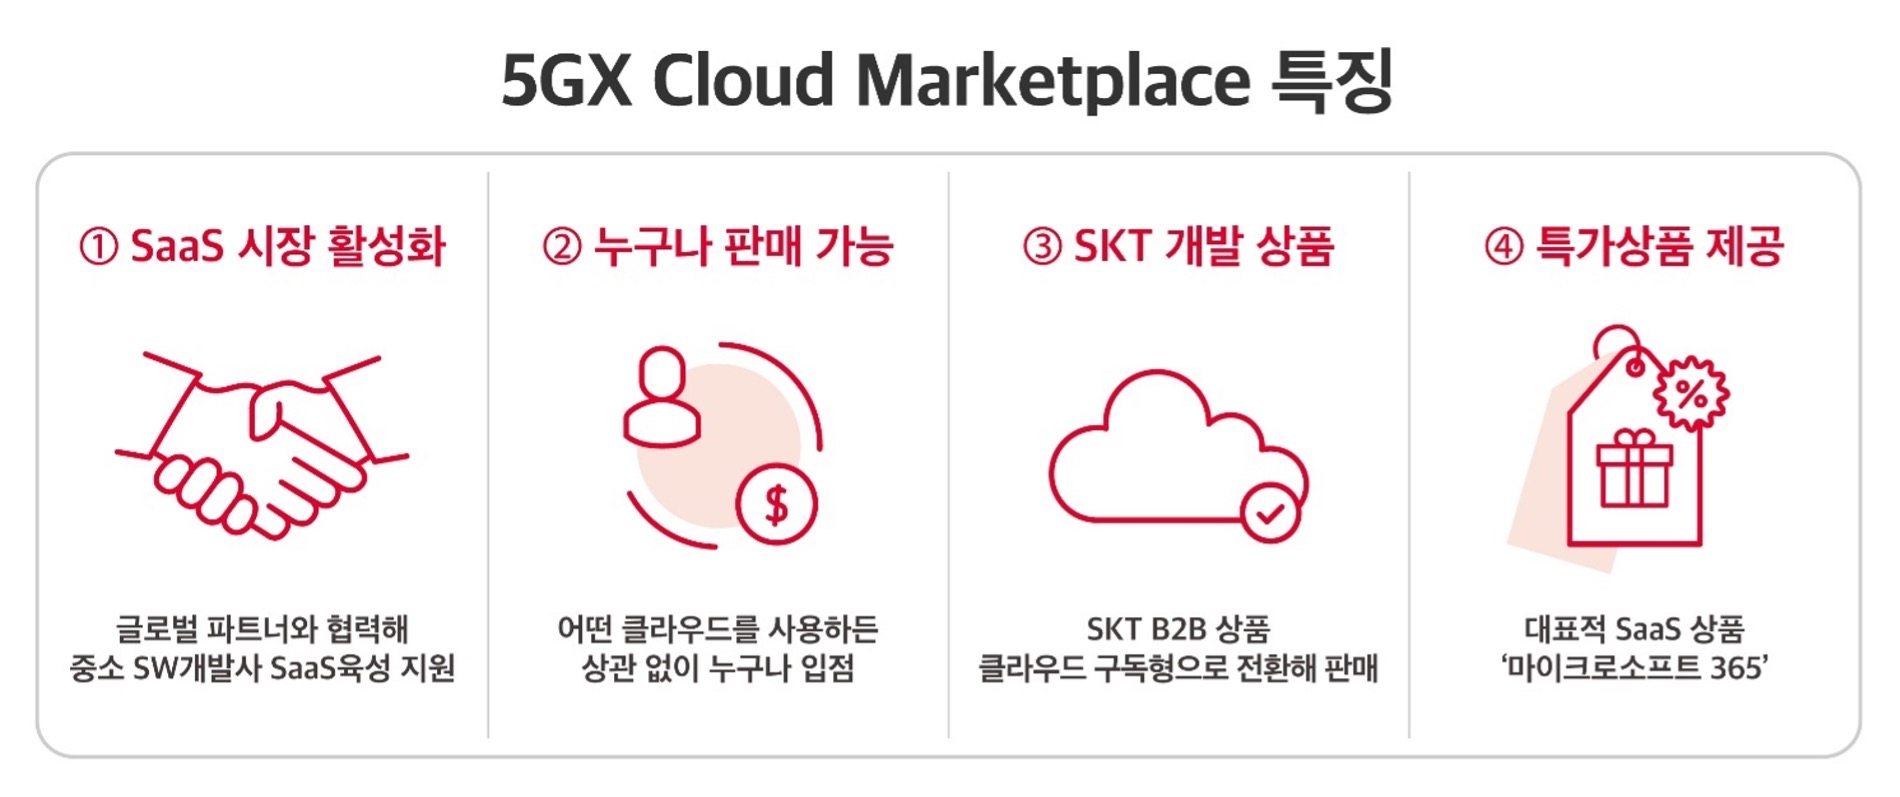 5GX Cloud Marketplace 특징